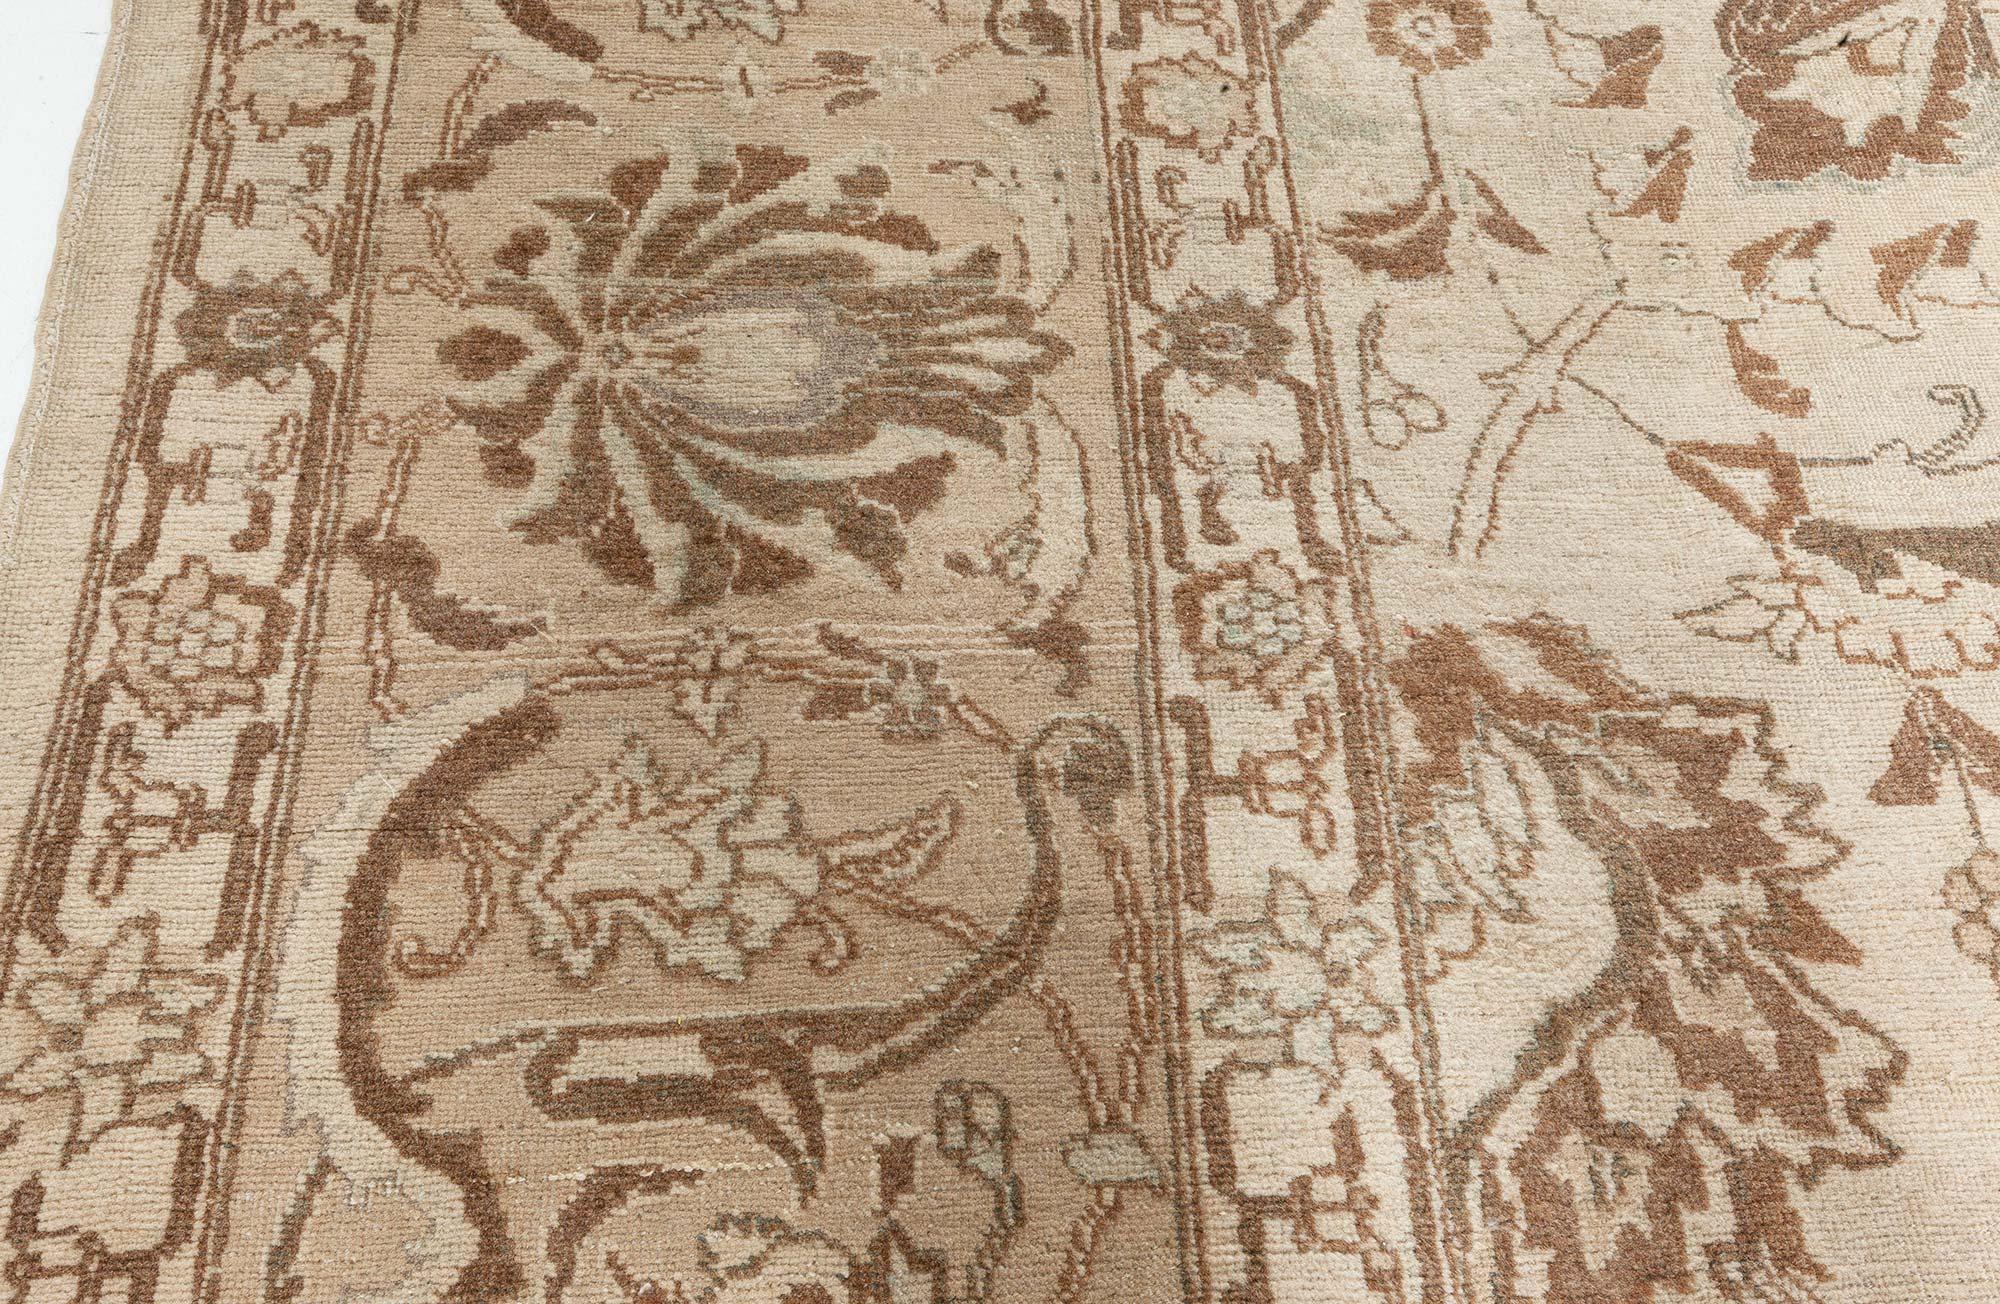 Antique Persian Tabriz rug
Size: 10'3